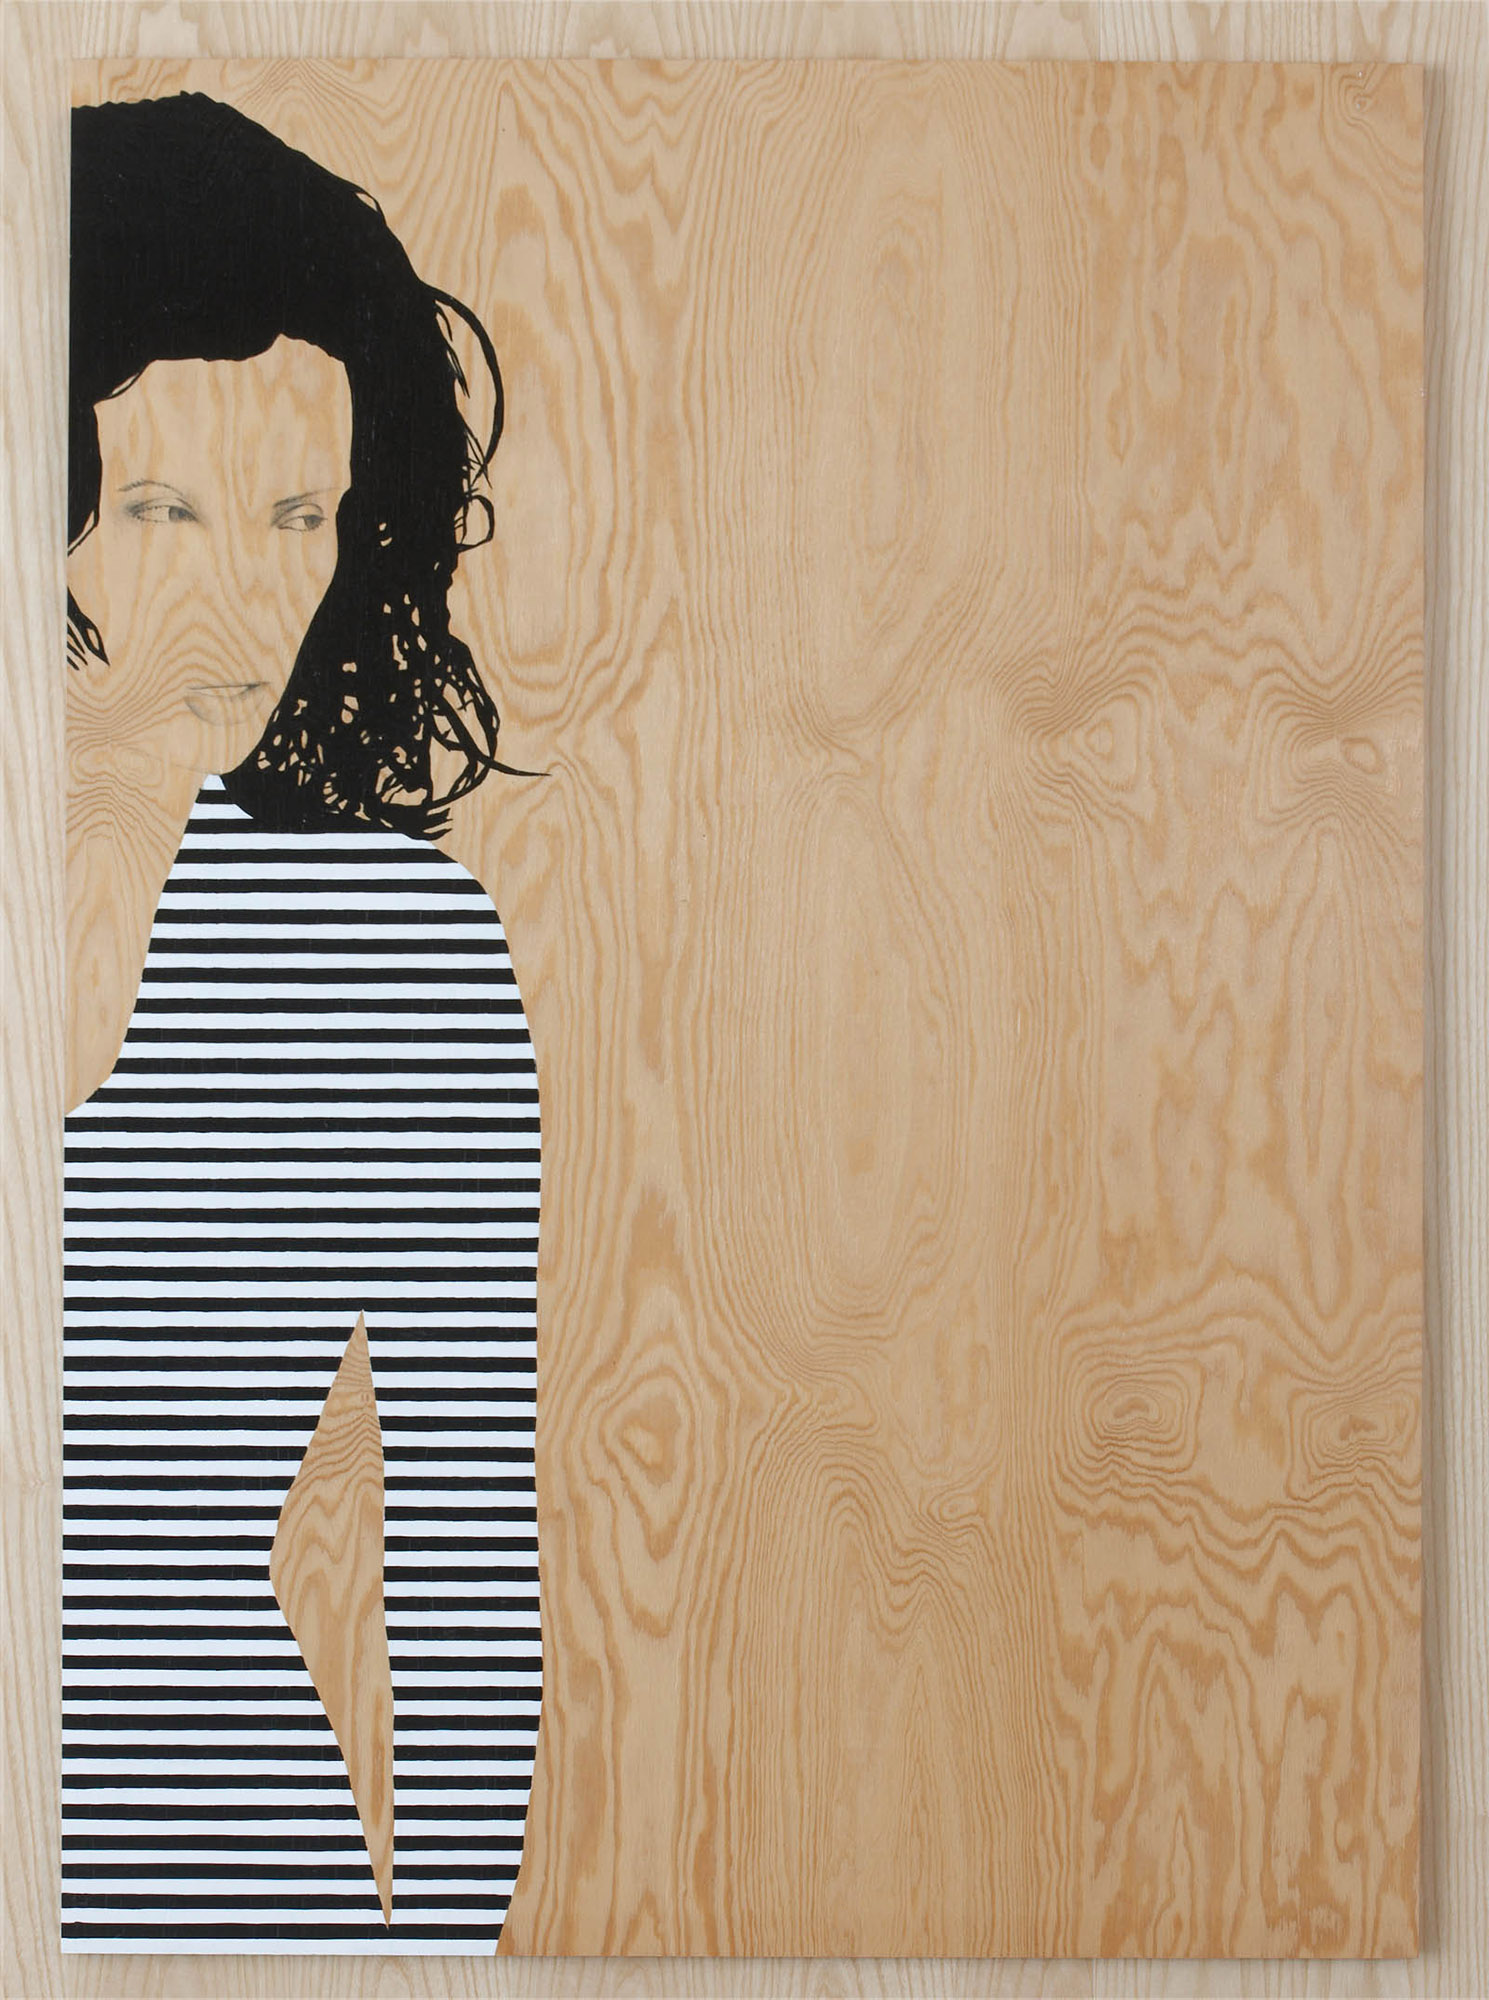 Painting on wood of woman in striped sweater, looking away. Robert Lucander, 13 paintings.